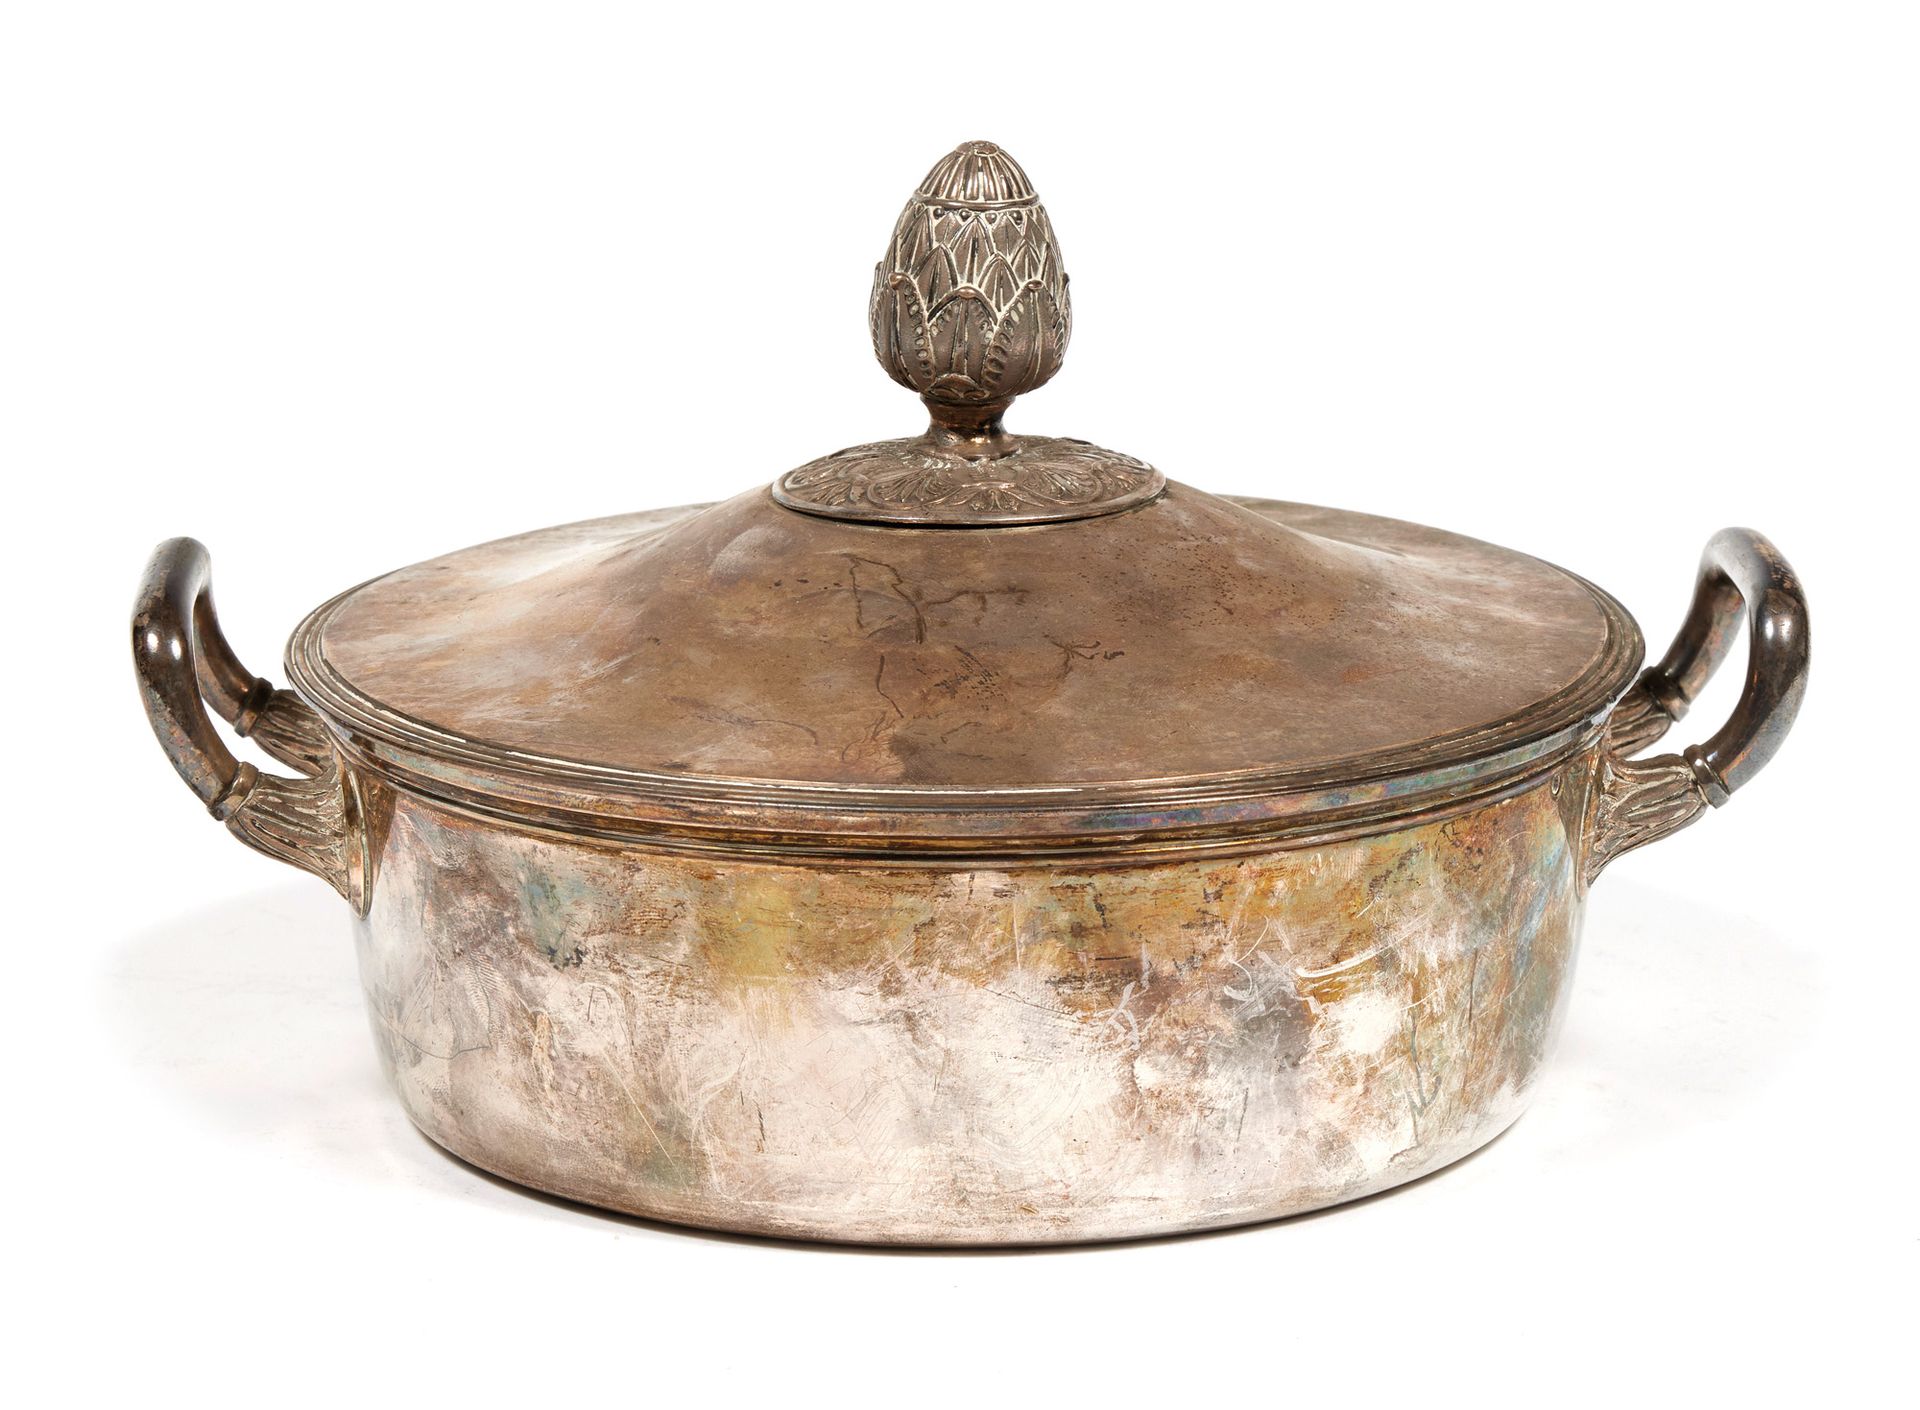 Légumier et son couvercle en argent Vegetable dish and its silver lid

By Gabrie&hellip;